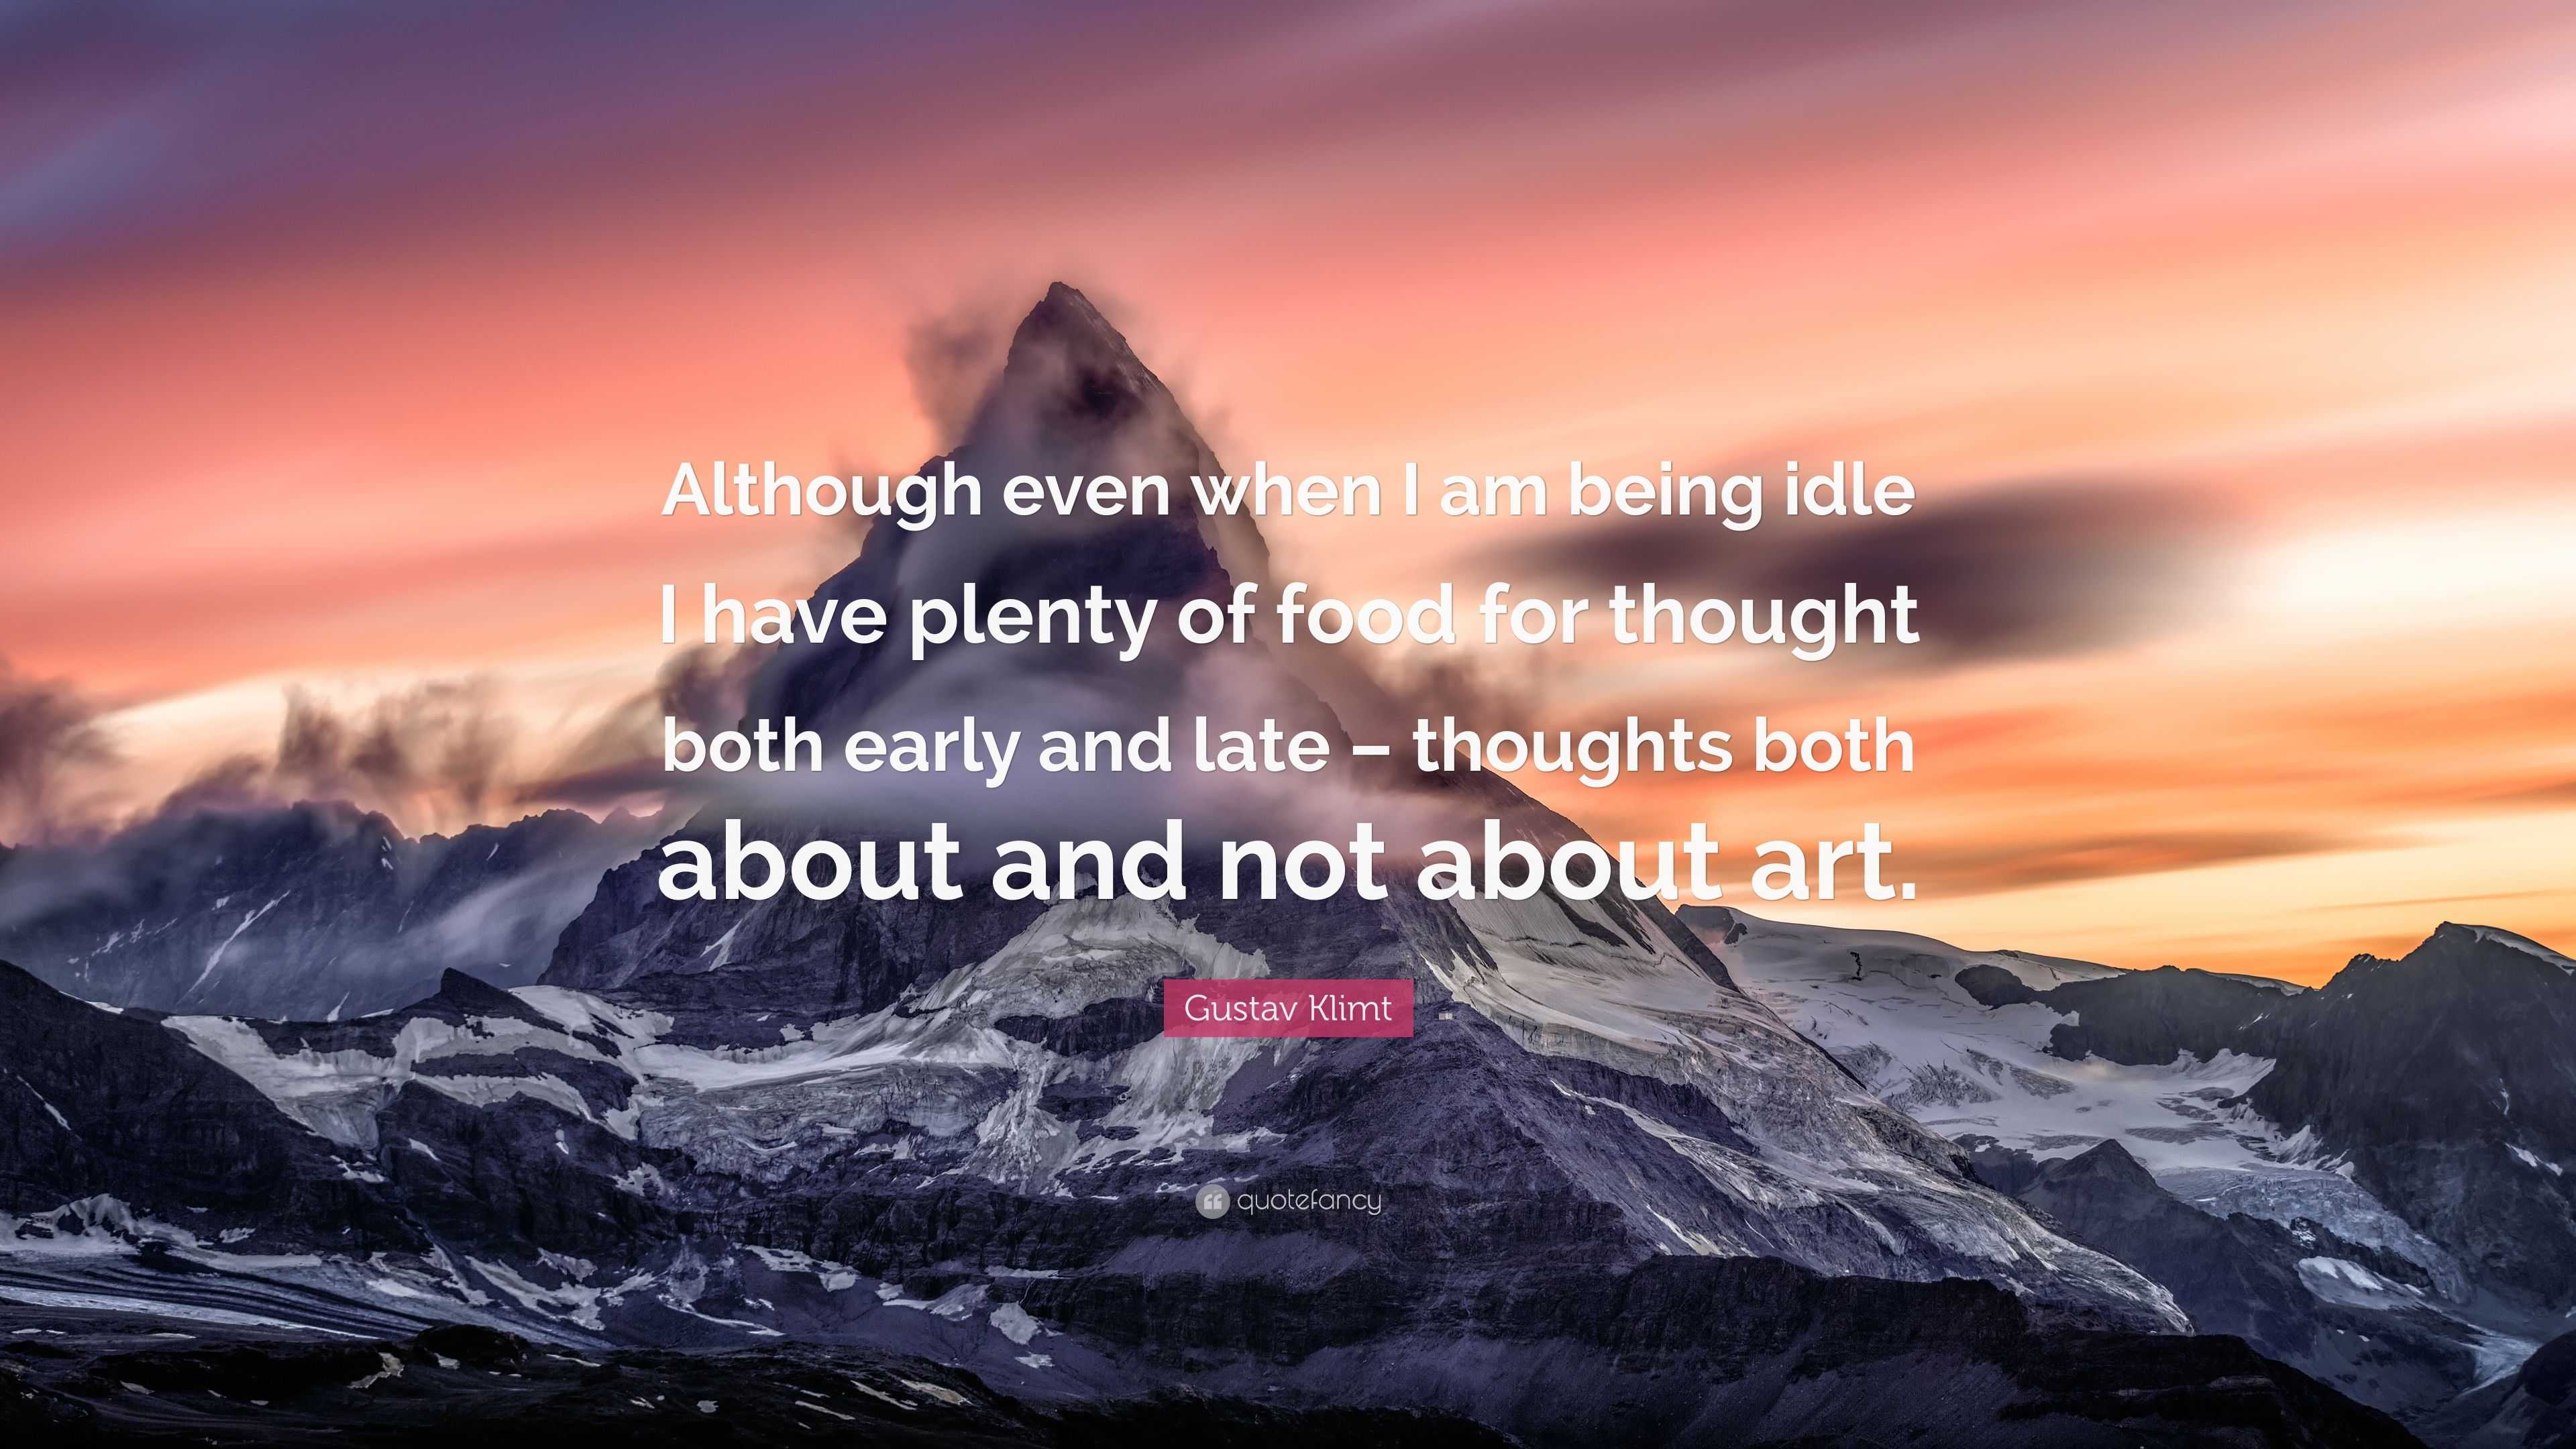 Gustav Klimt Quote: “Although even when I am being idle I have plenty ...